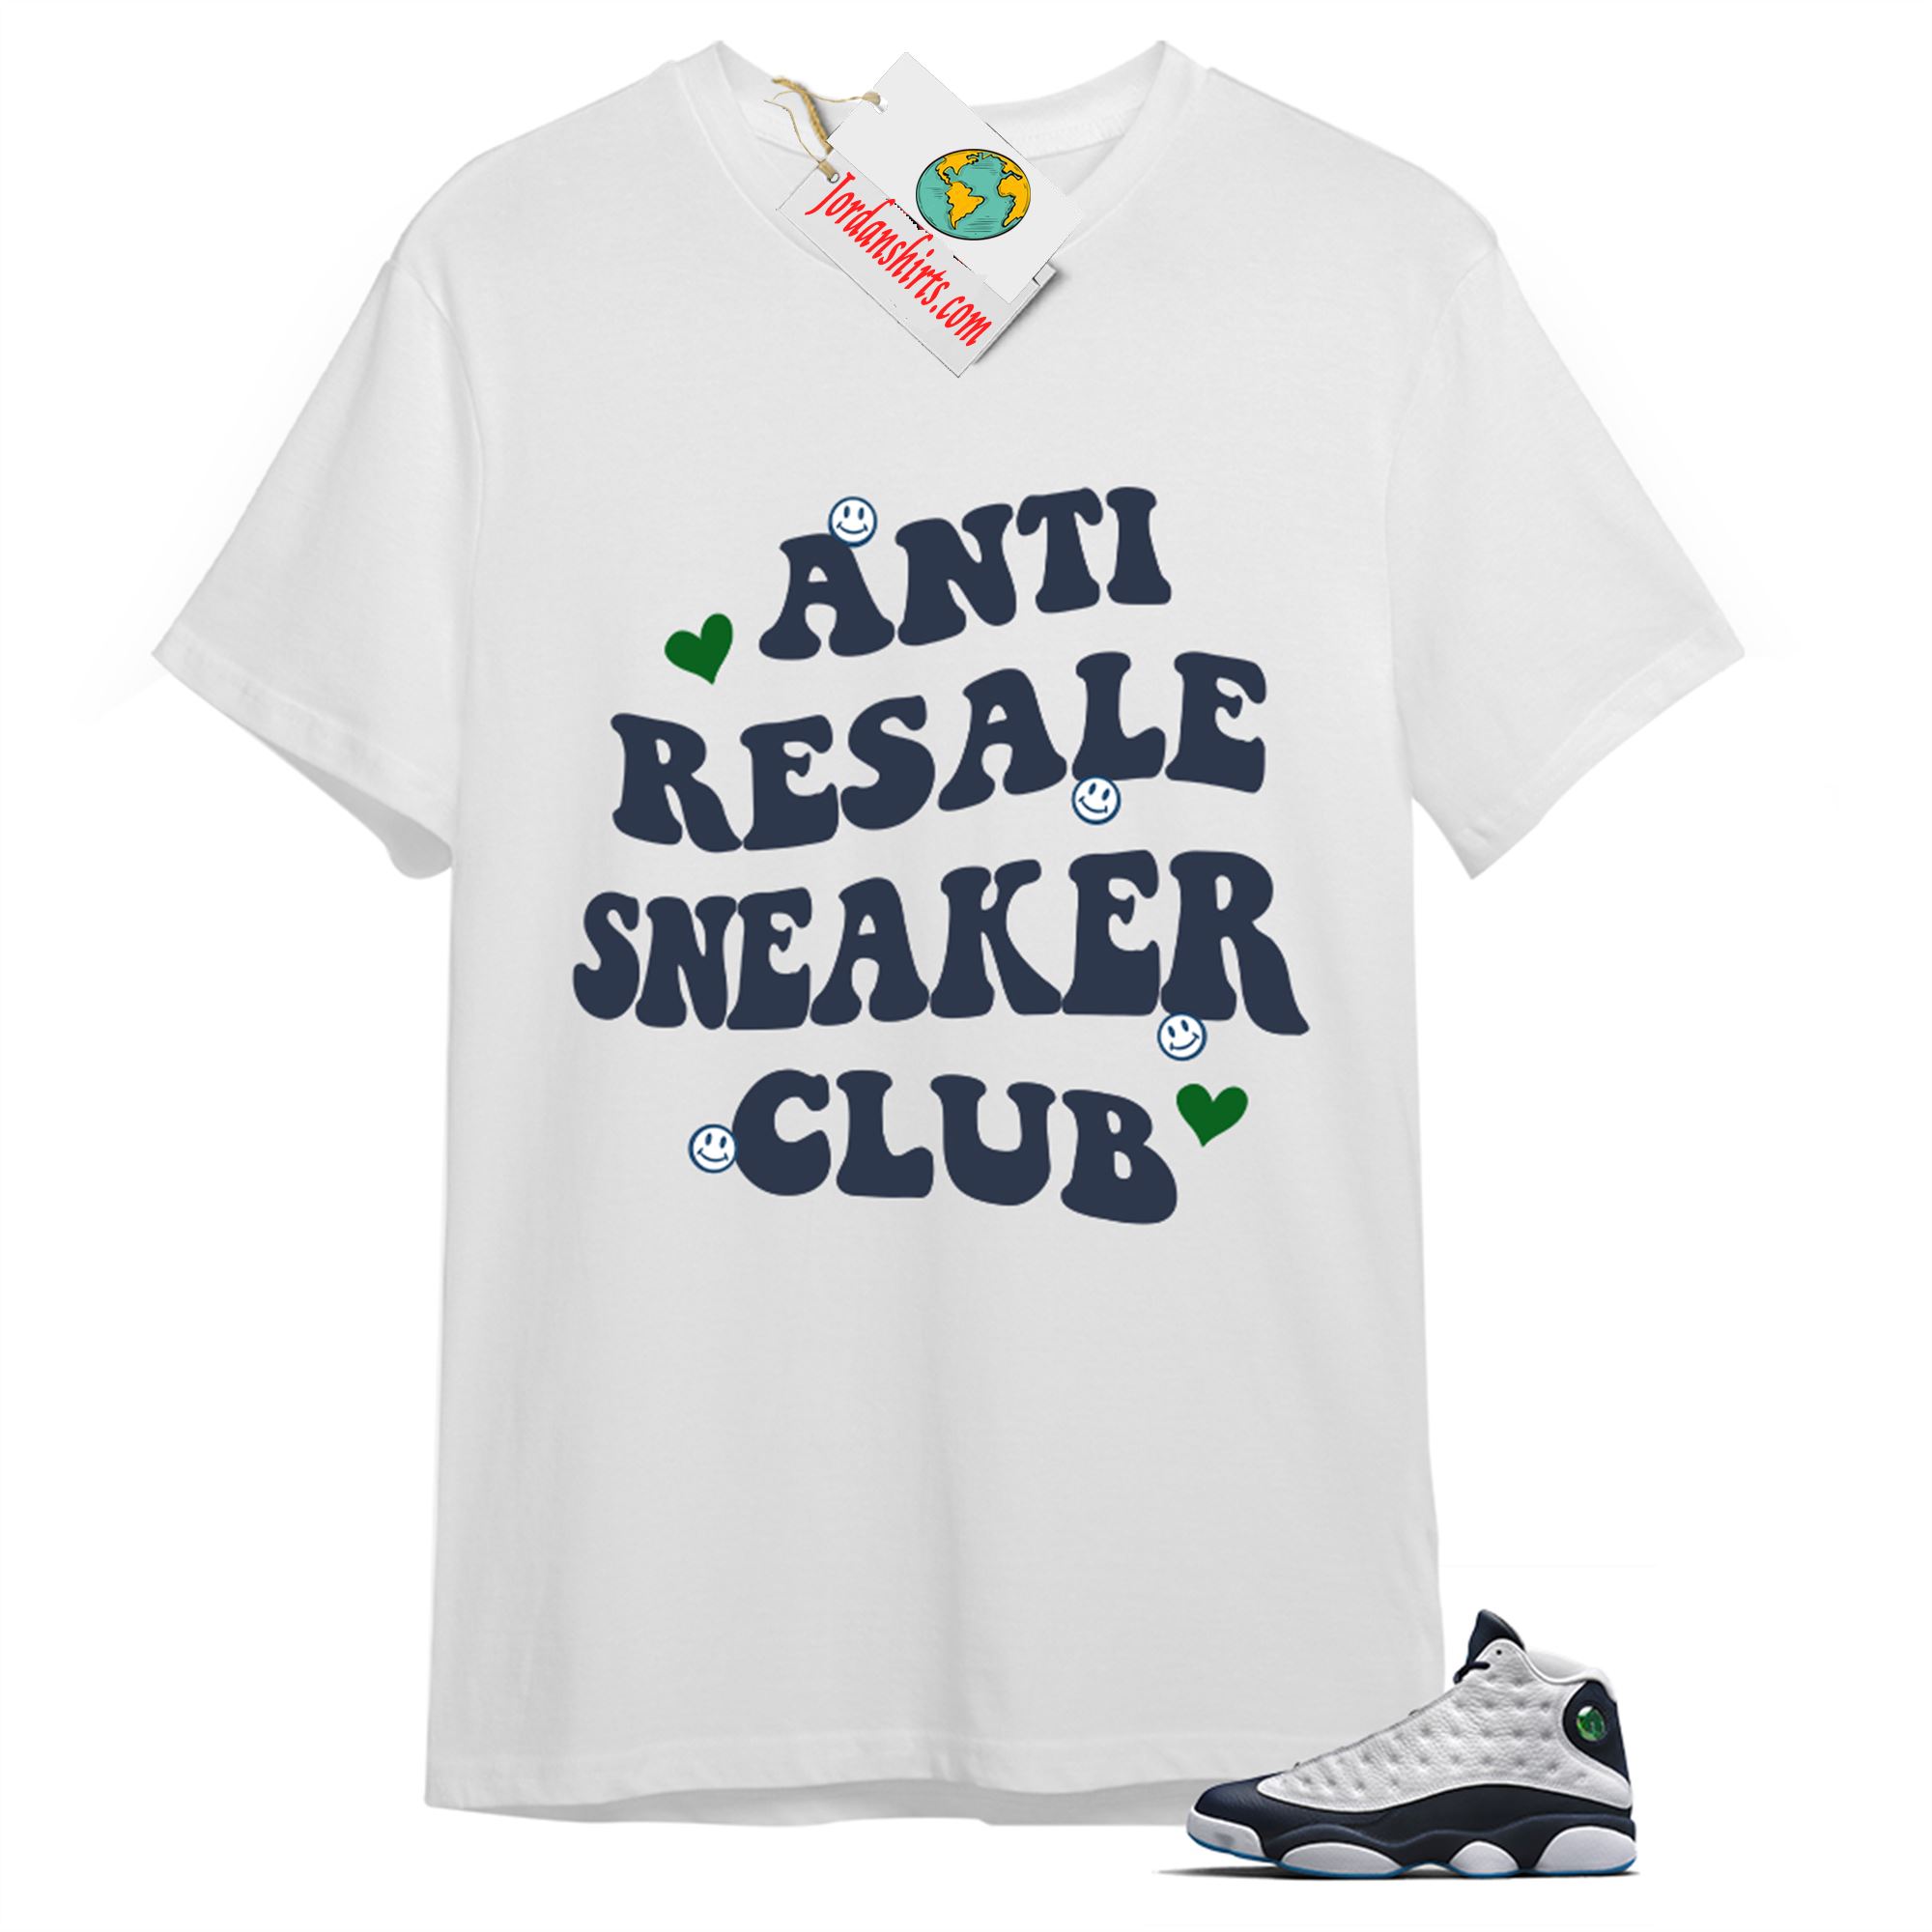 Jordan 13 Shirt, Anti Resale Sneaker Club White T-shirt Air Jordan 13 Obsidian 13s Size Up To 5xl